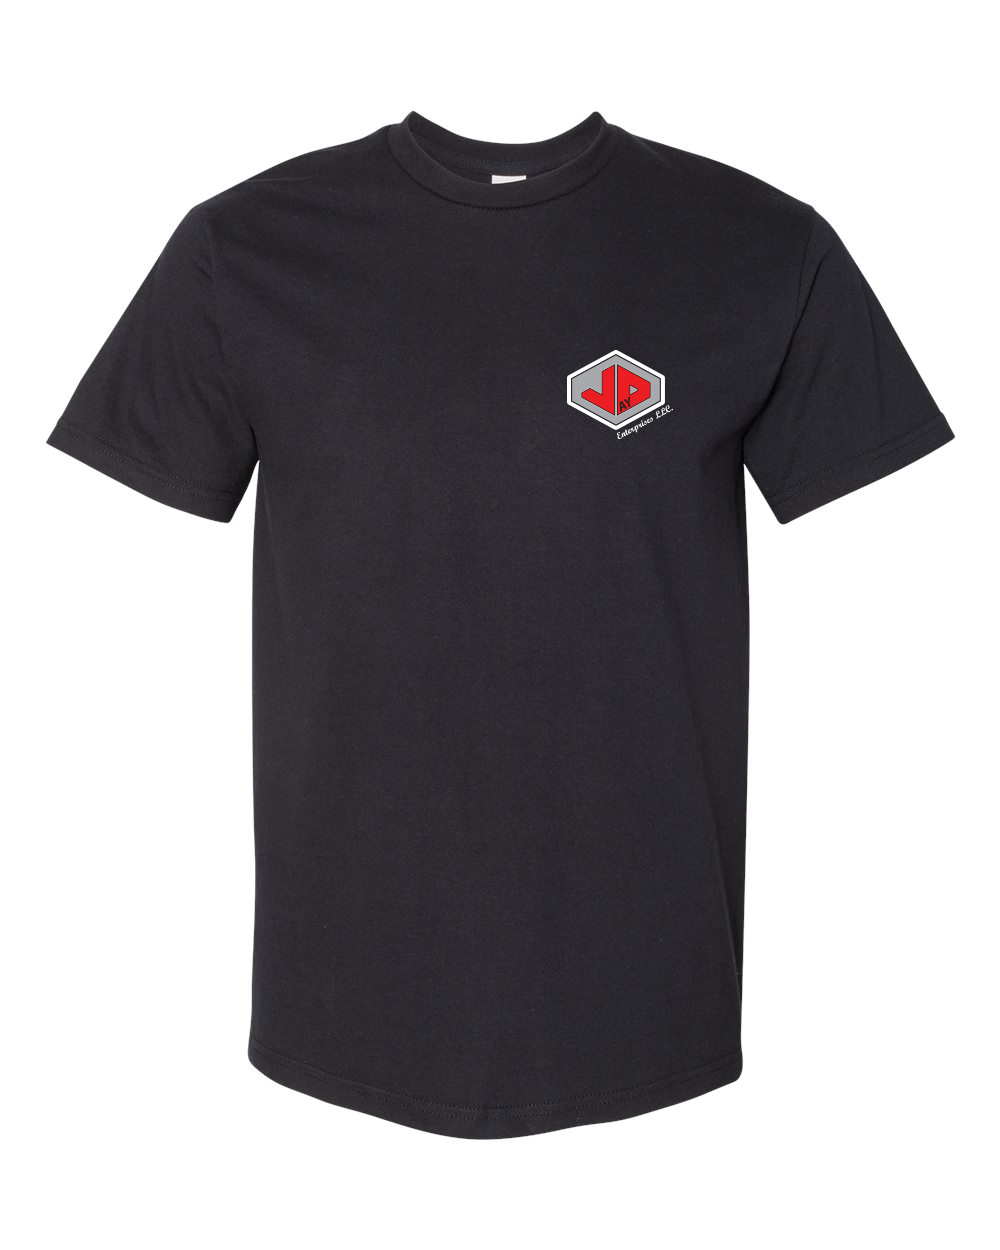 Jay D Enterprises - Gildan Hammer T-Shirt